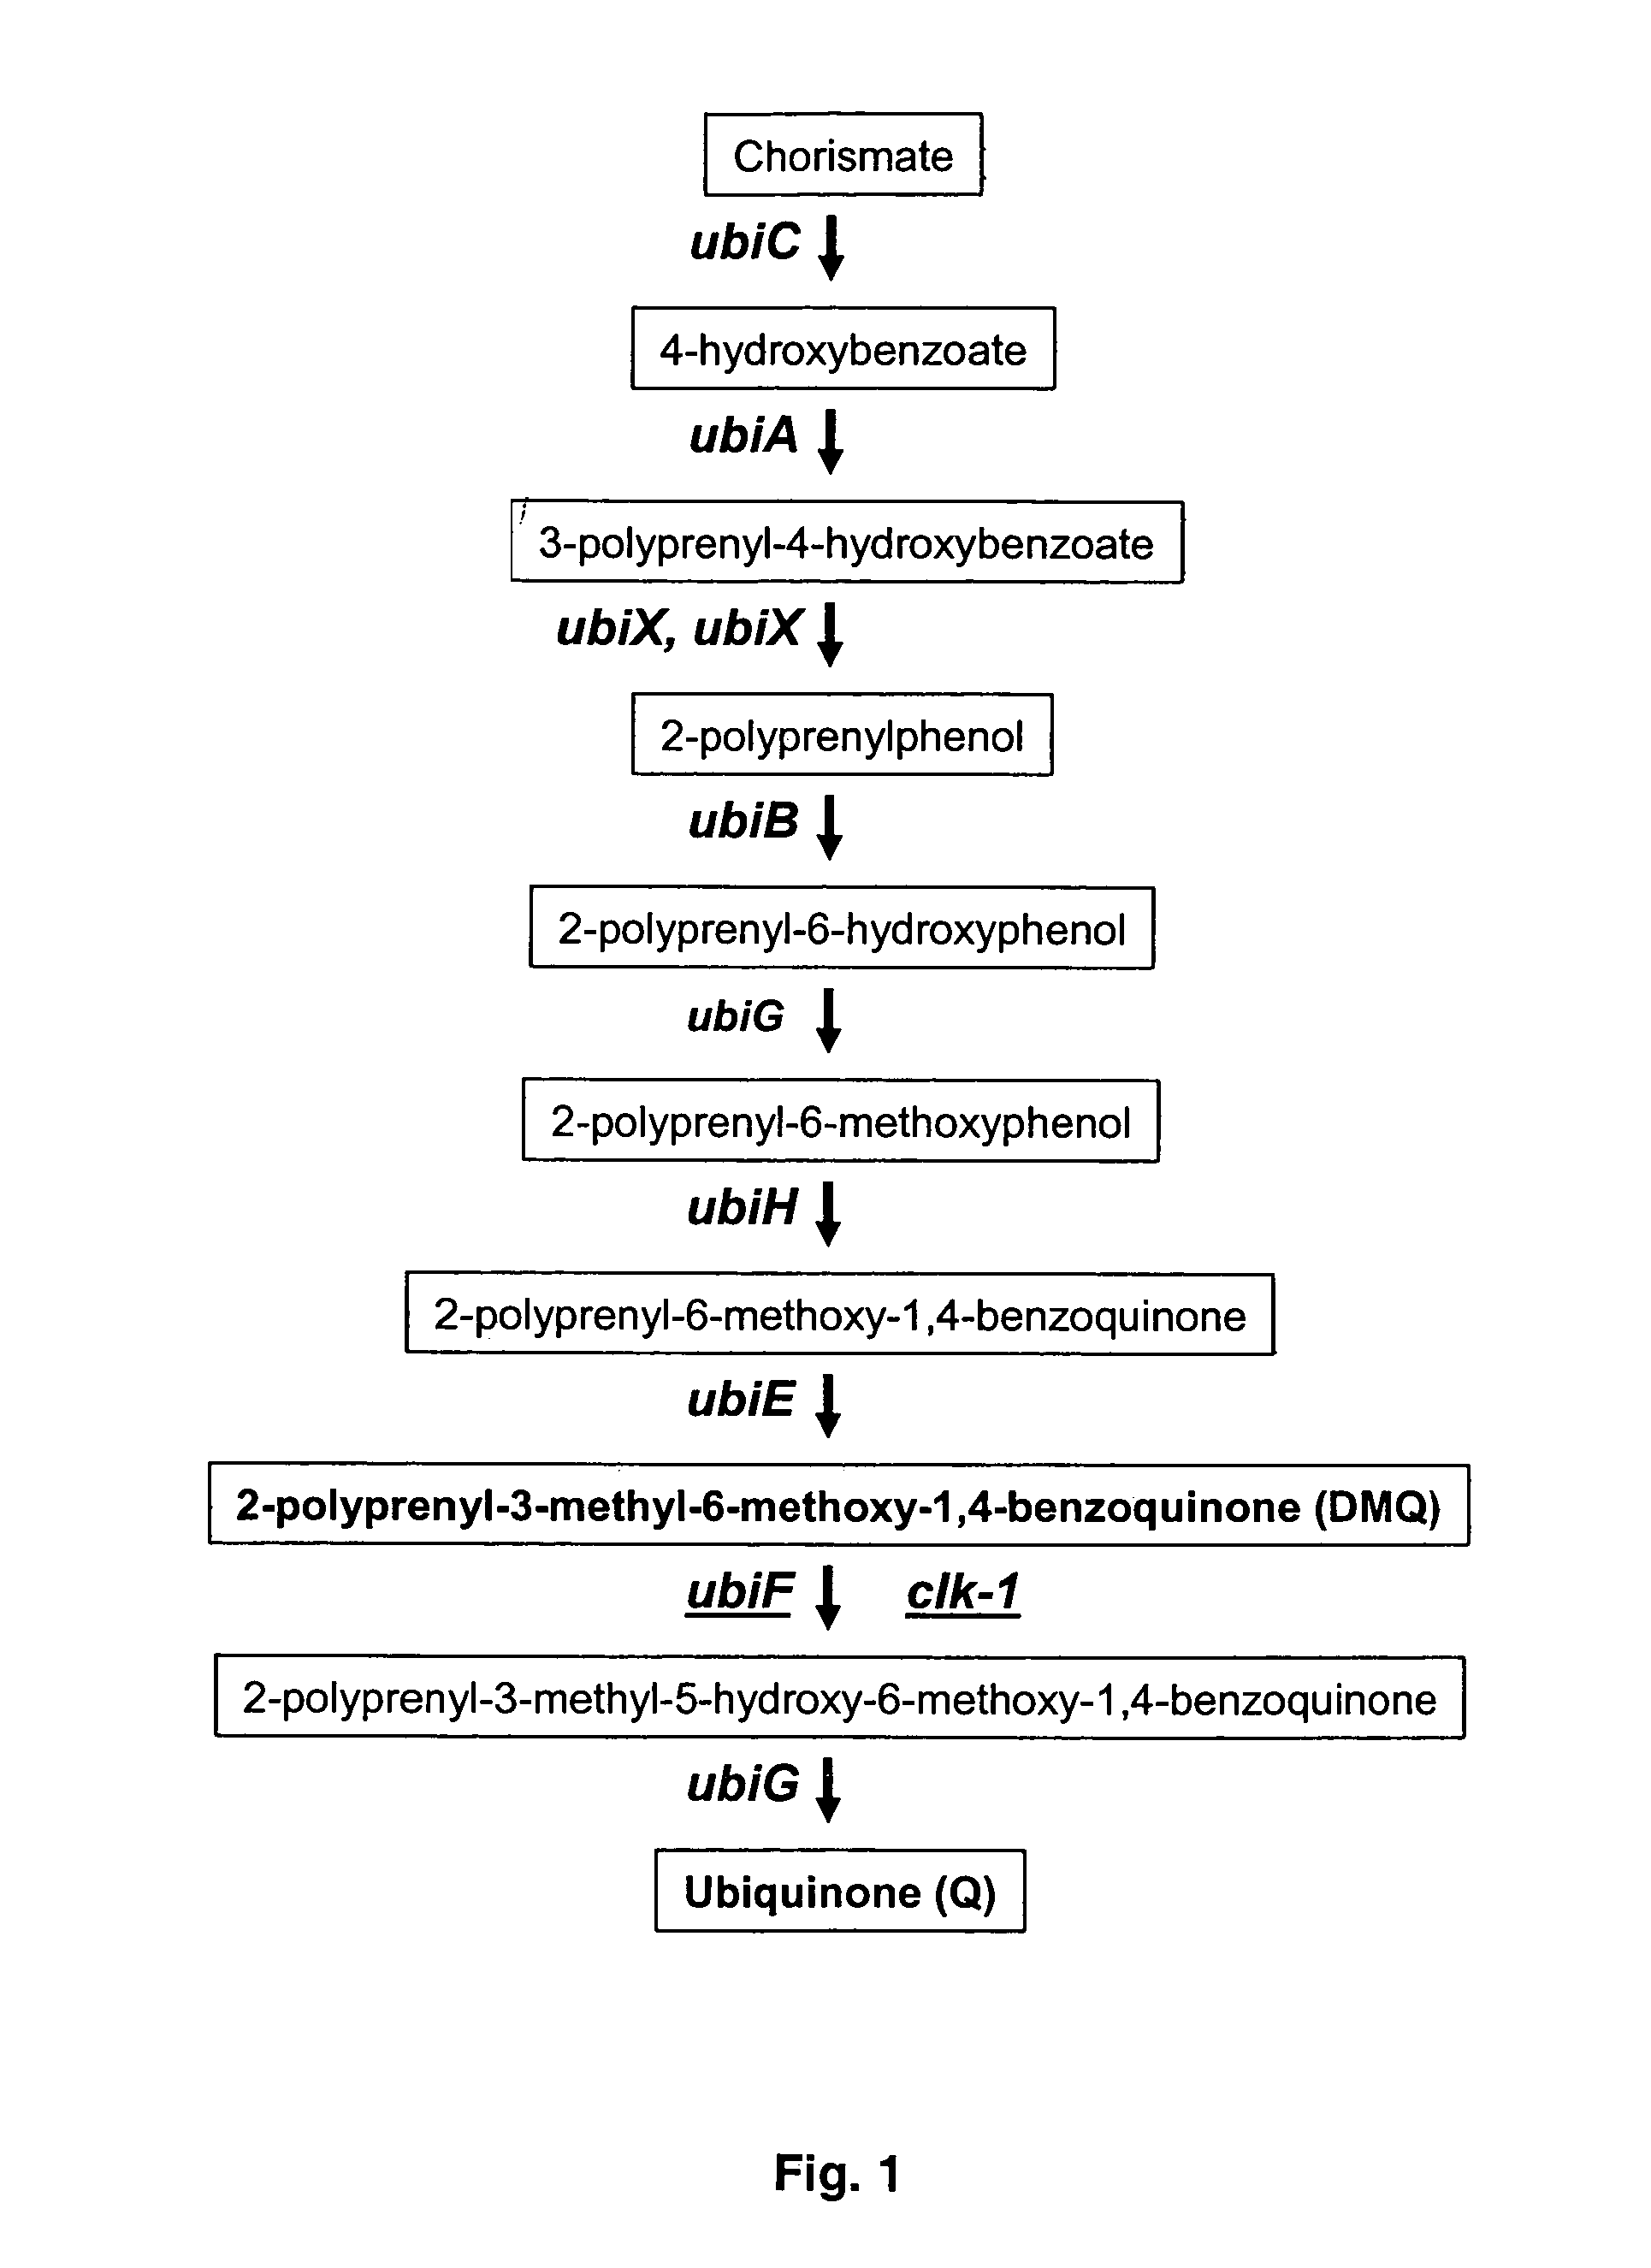 Method for identifying modulators of CLK-1 and UbiF activity